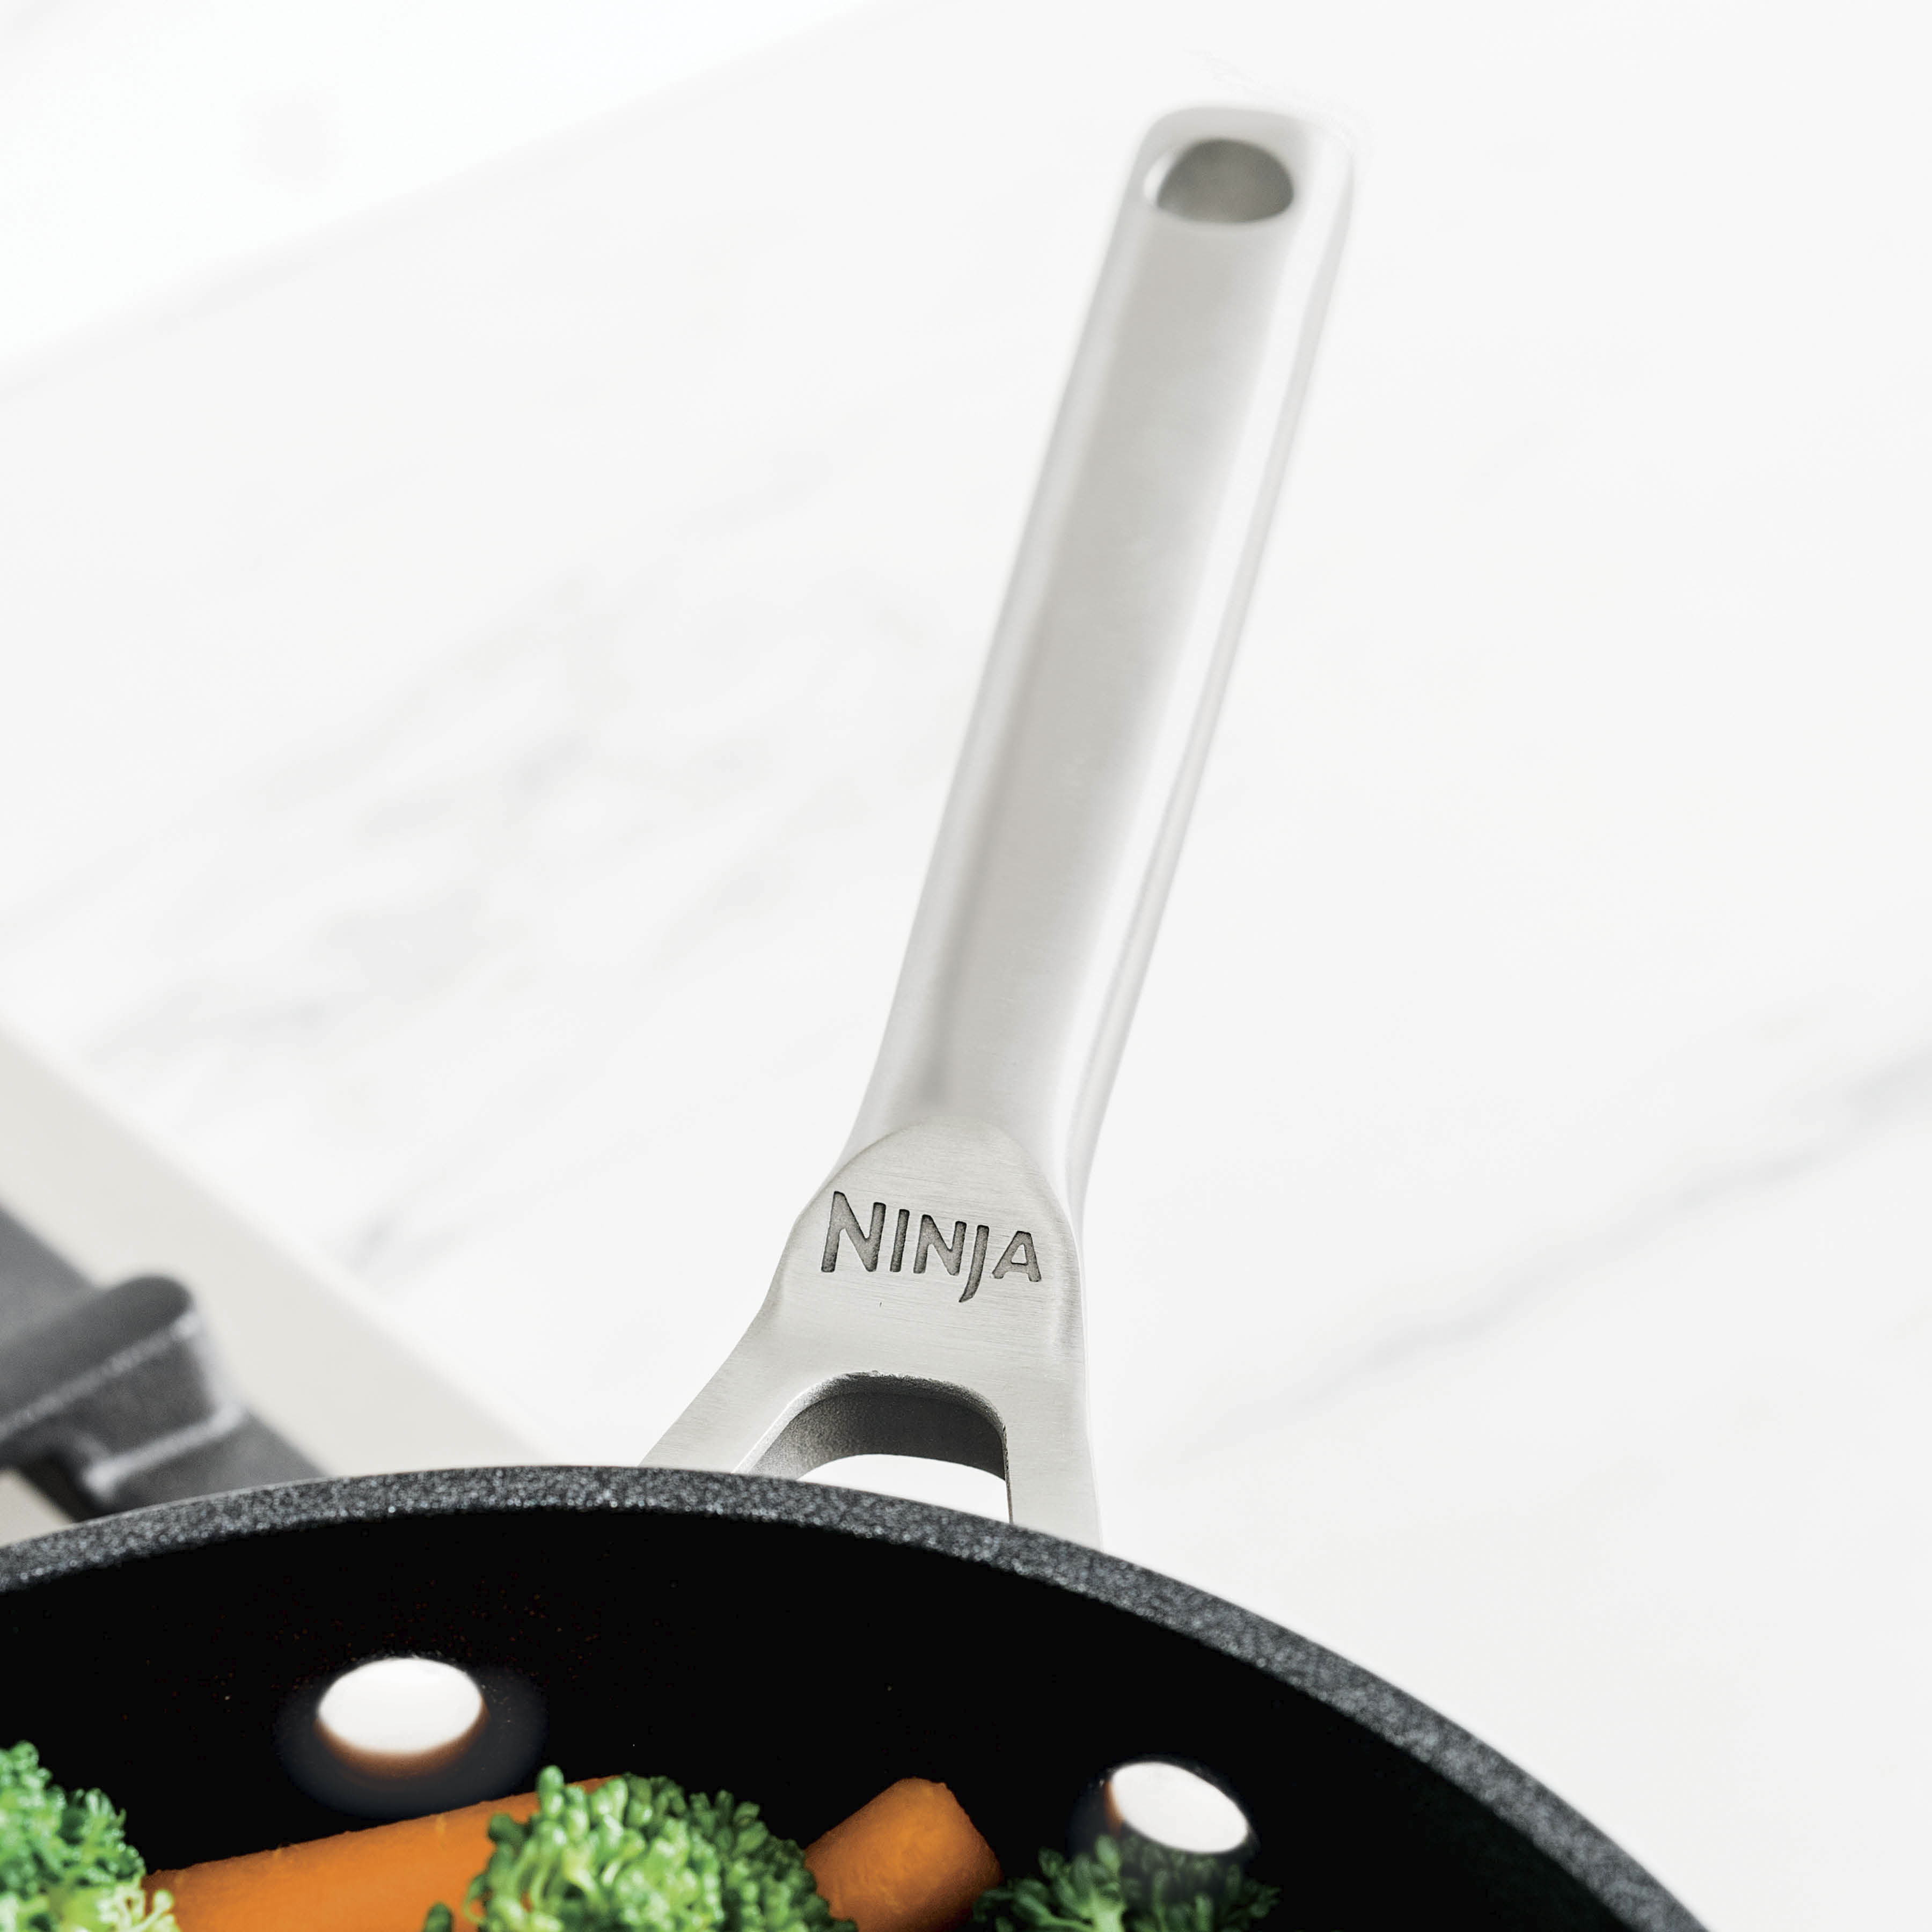 Ninja Foodi NeverStick Premium Anti-Scratch Nest System 6-pc. Cookware Set